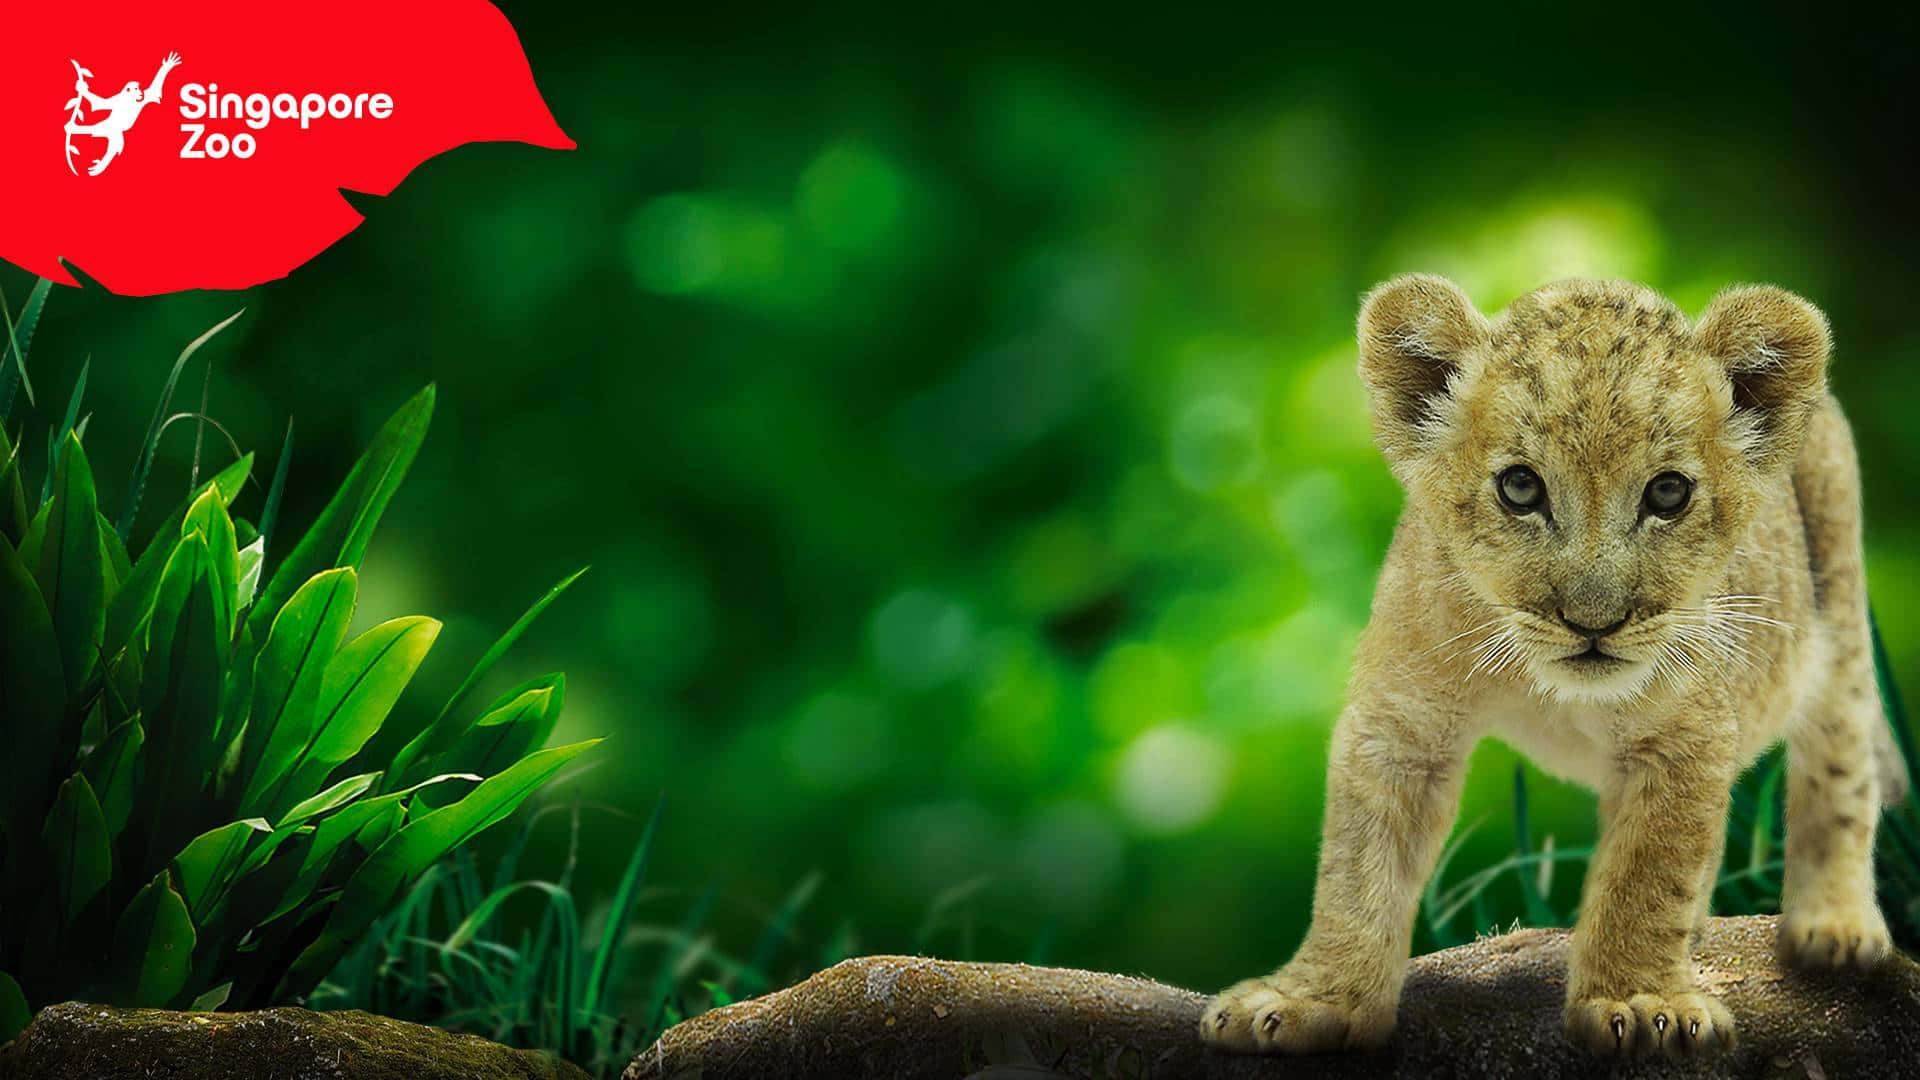 Cute Lion Cub In Singapore Zoo Wallpaper